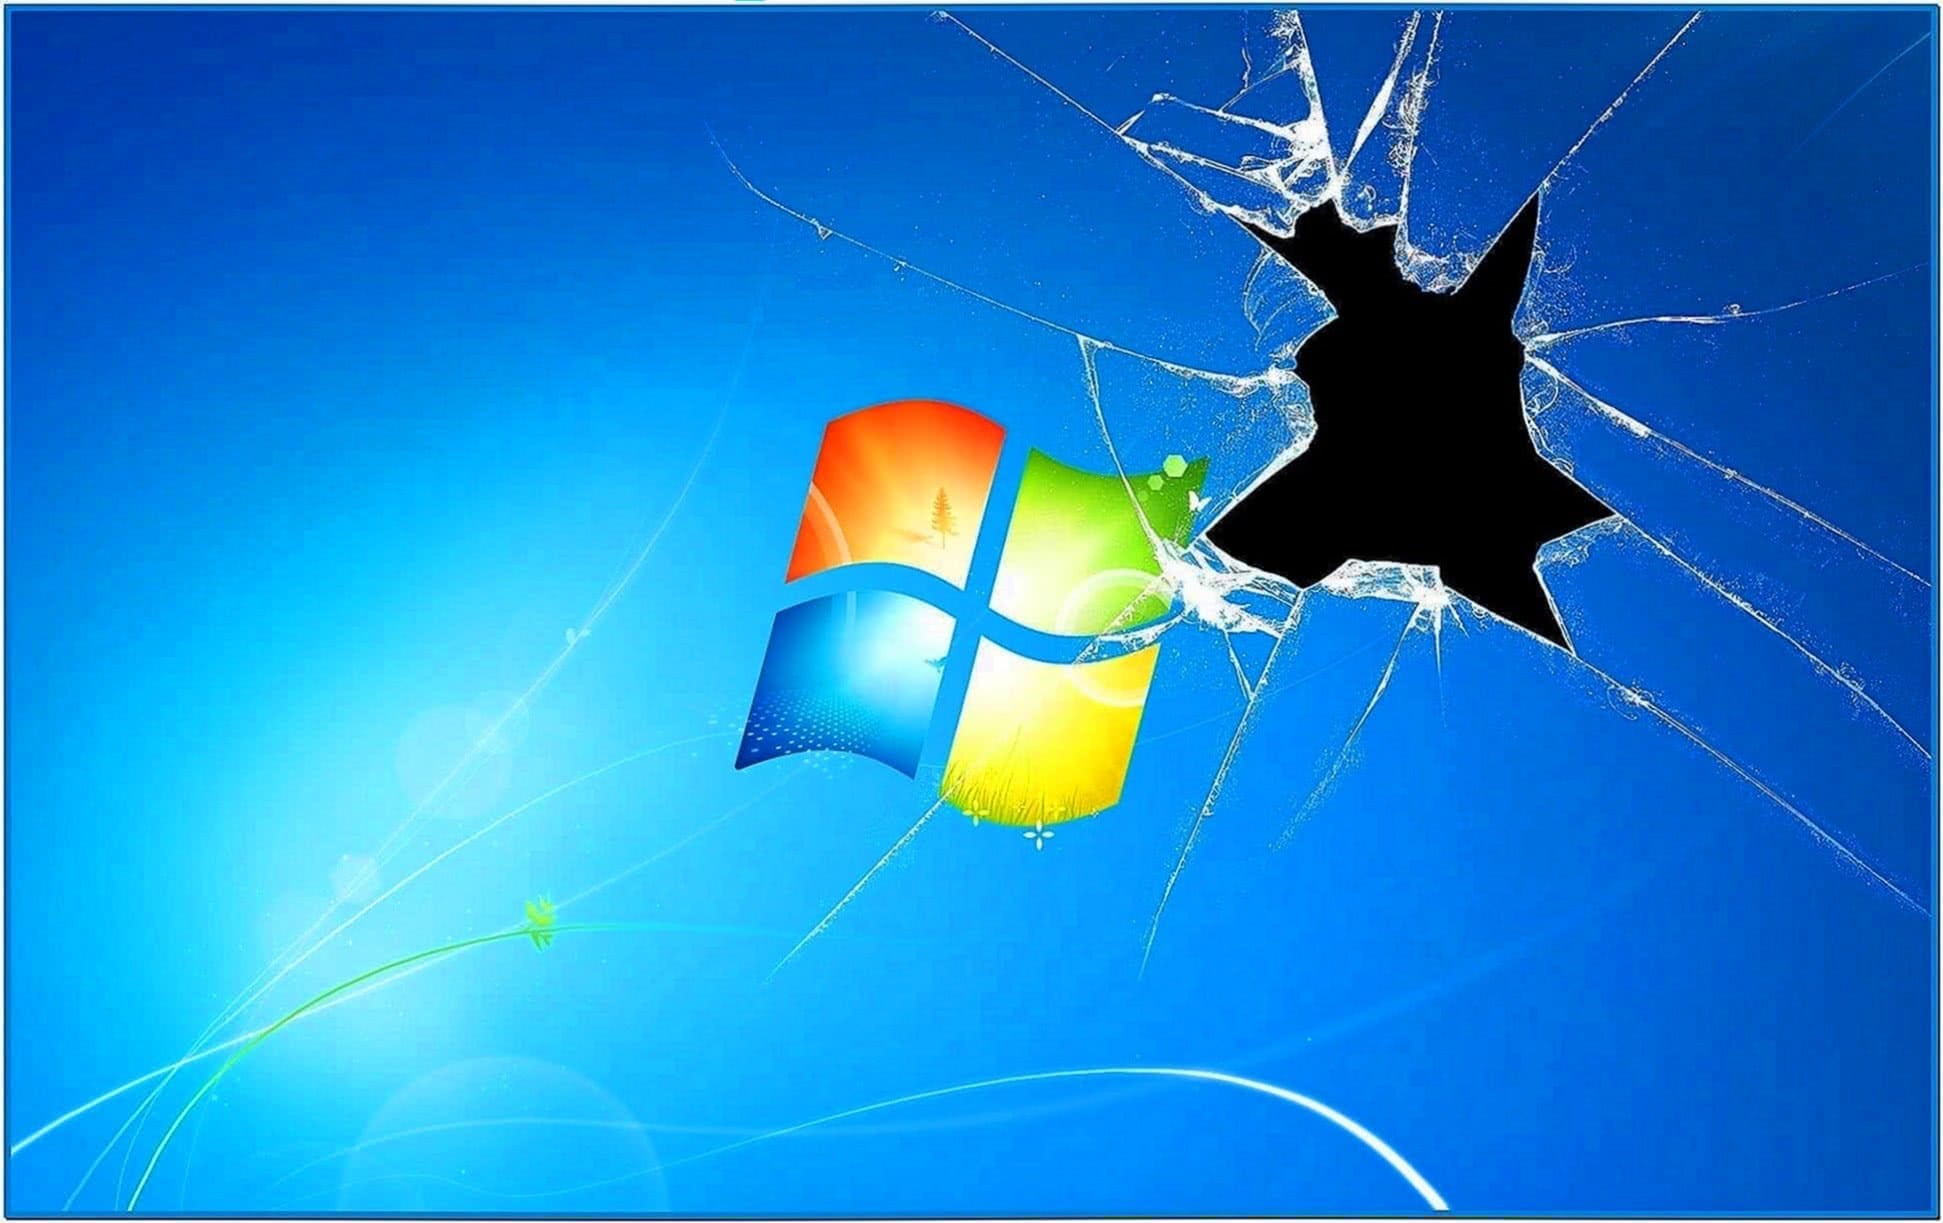 Broken glass screensaver - Download free